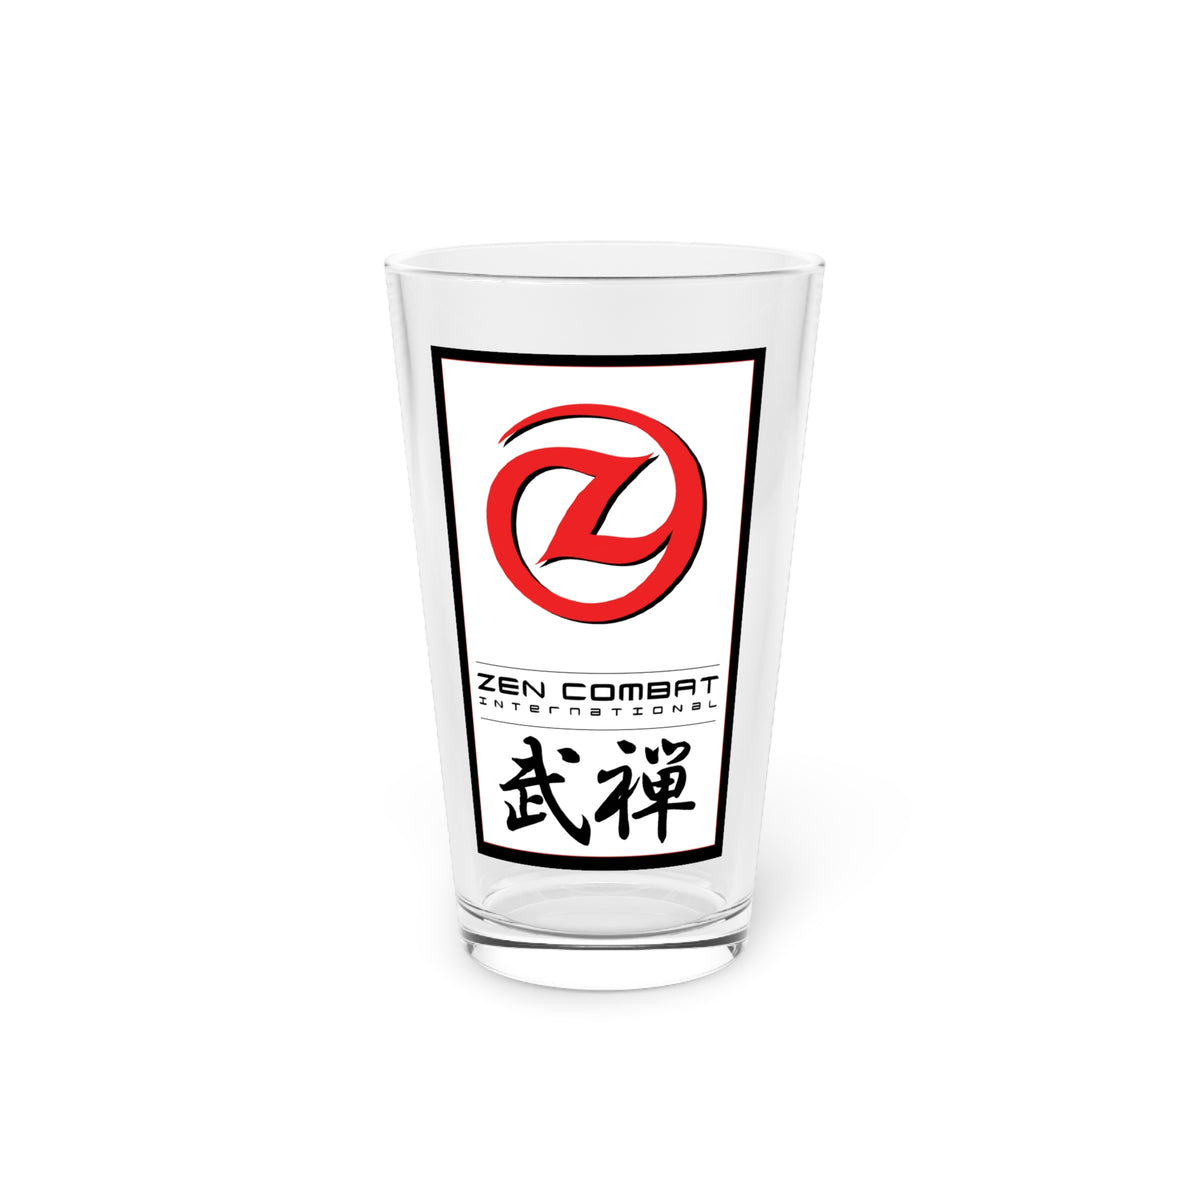 Zen Combat White Banner Pint Glass, 16oz